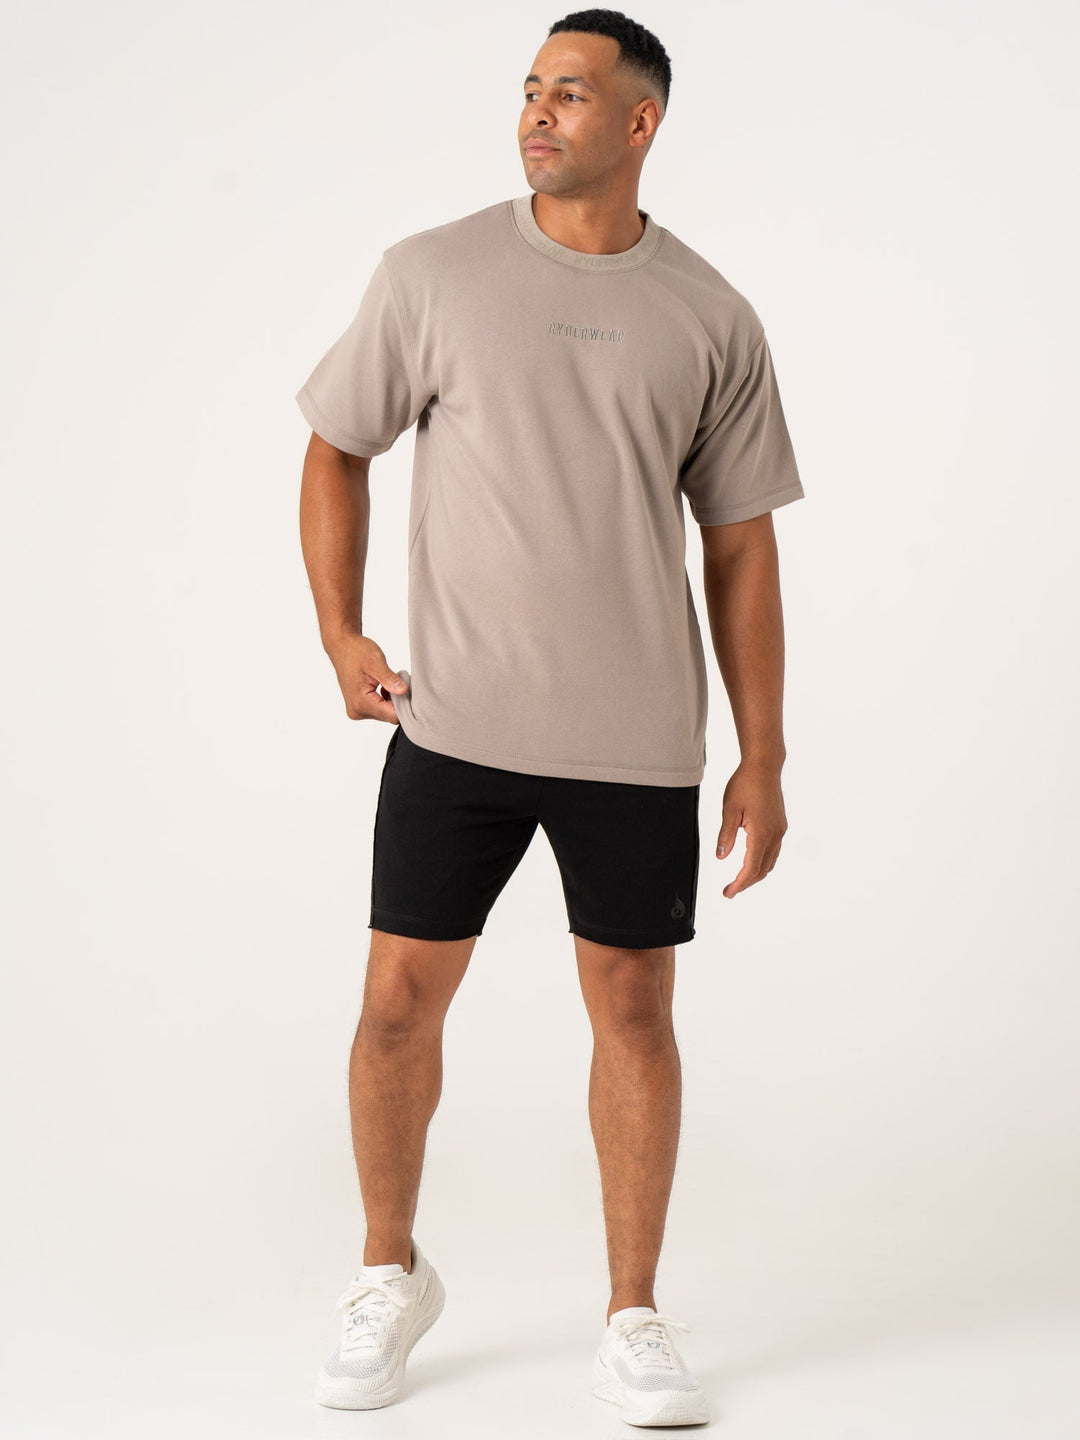 Pursuit Fleece T-Shirt - Taupe Clothing Ryderwear 